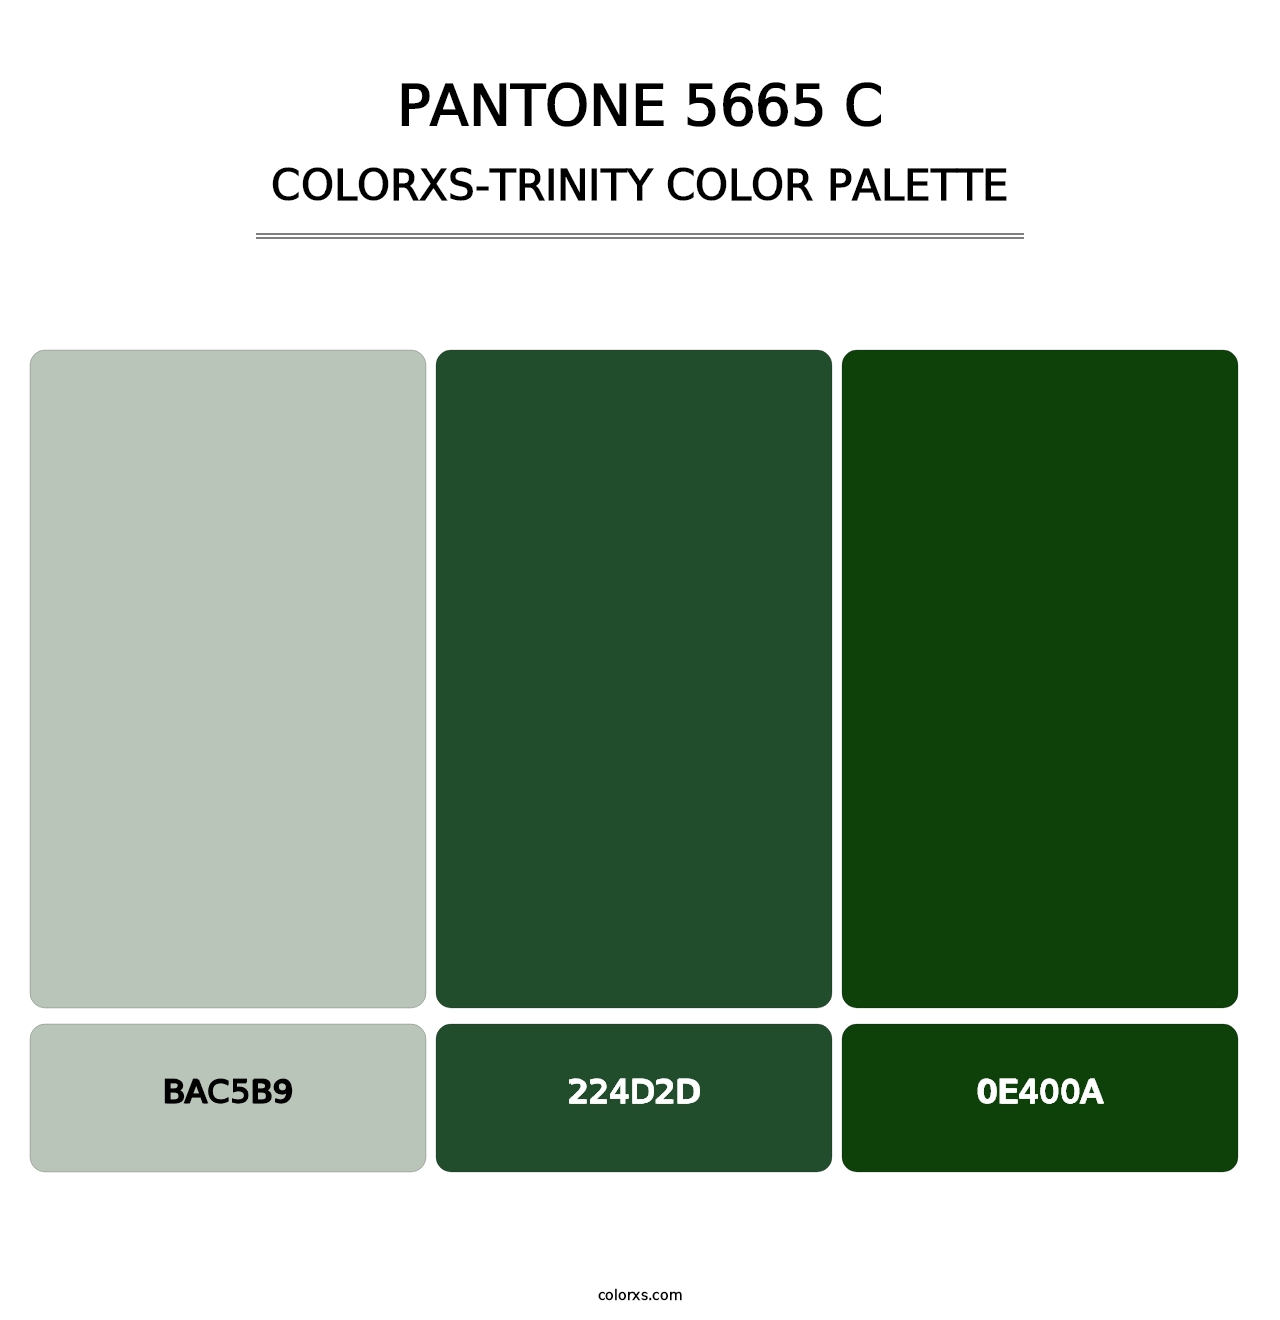 PANTONE 5665 C - Colorxs Trinity Palette